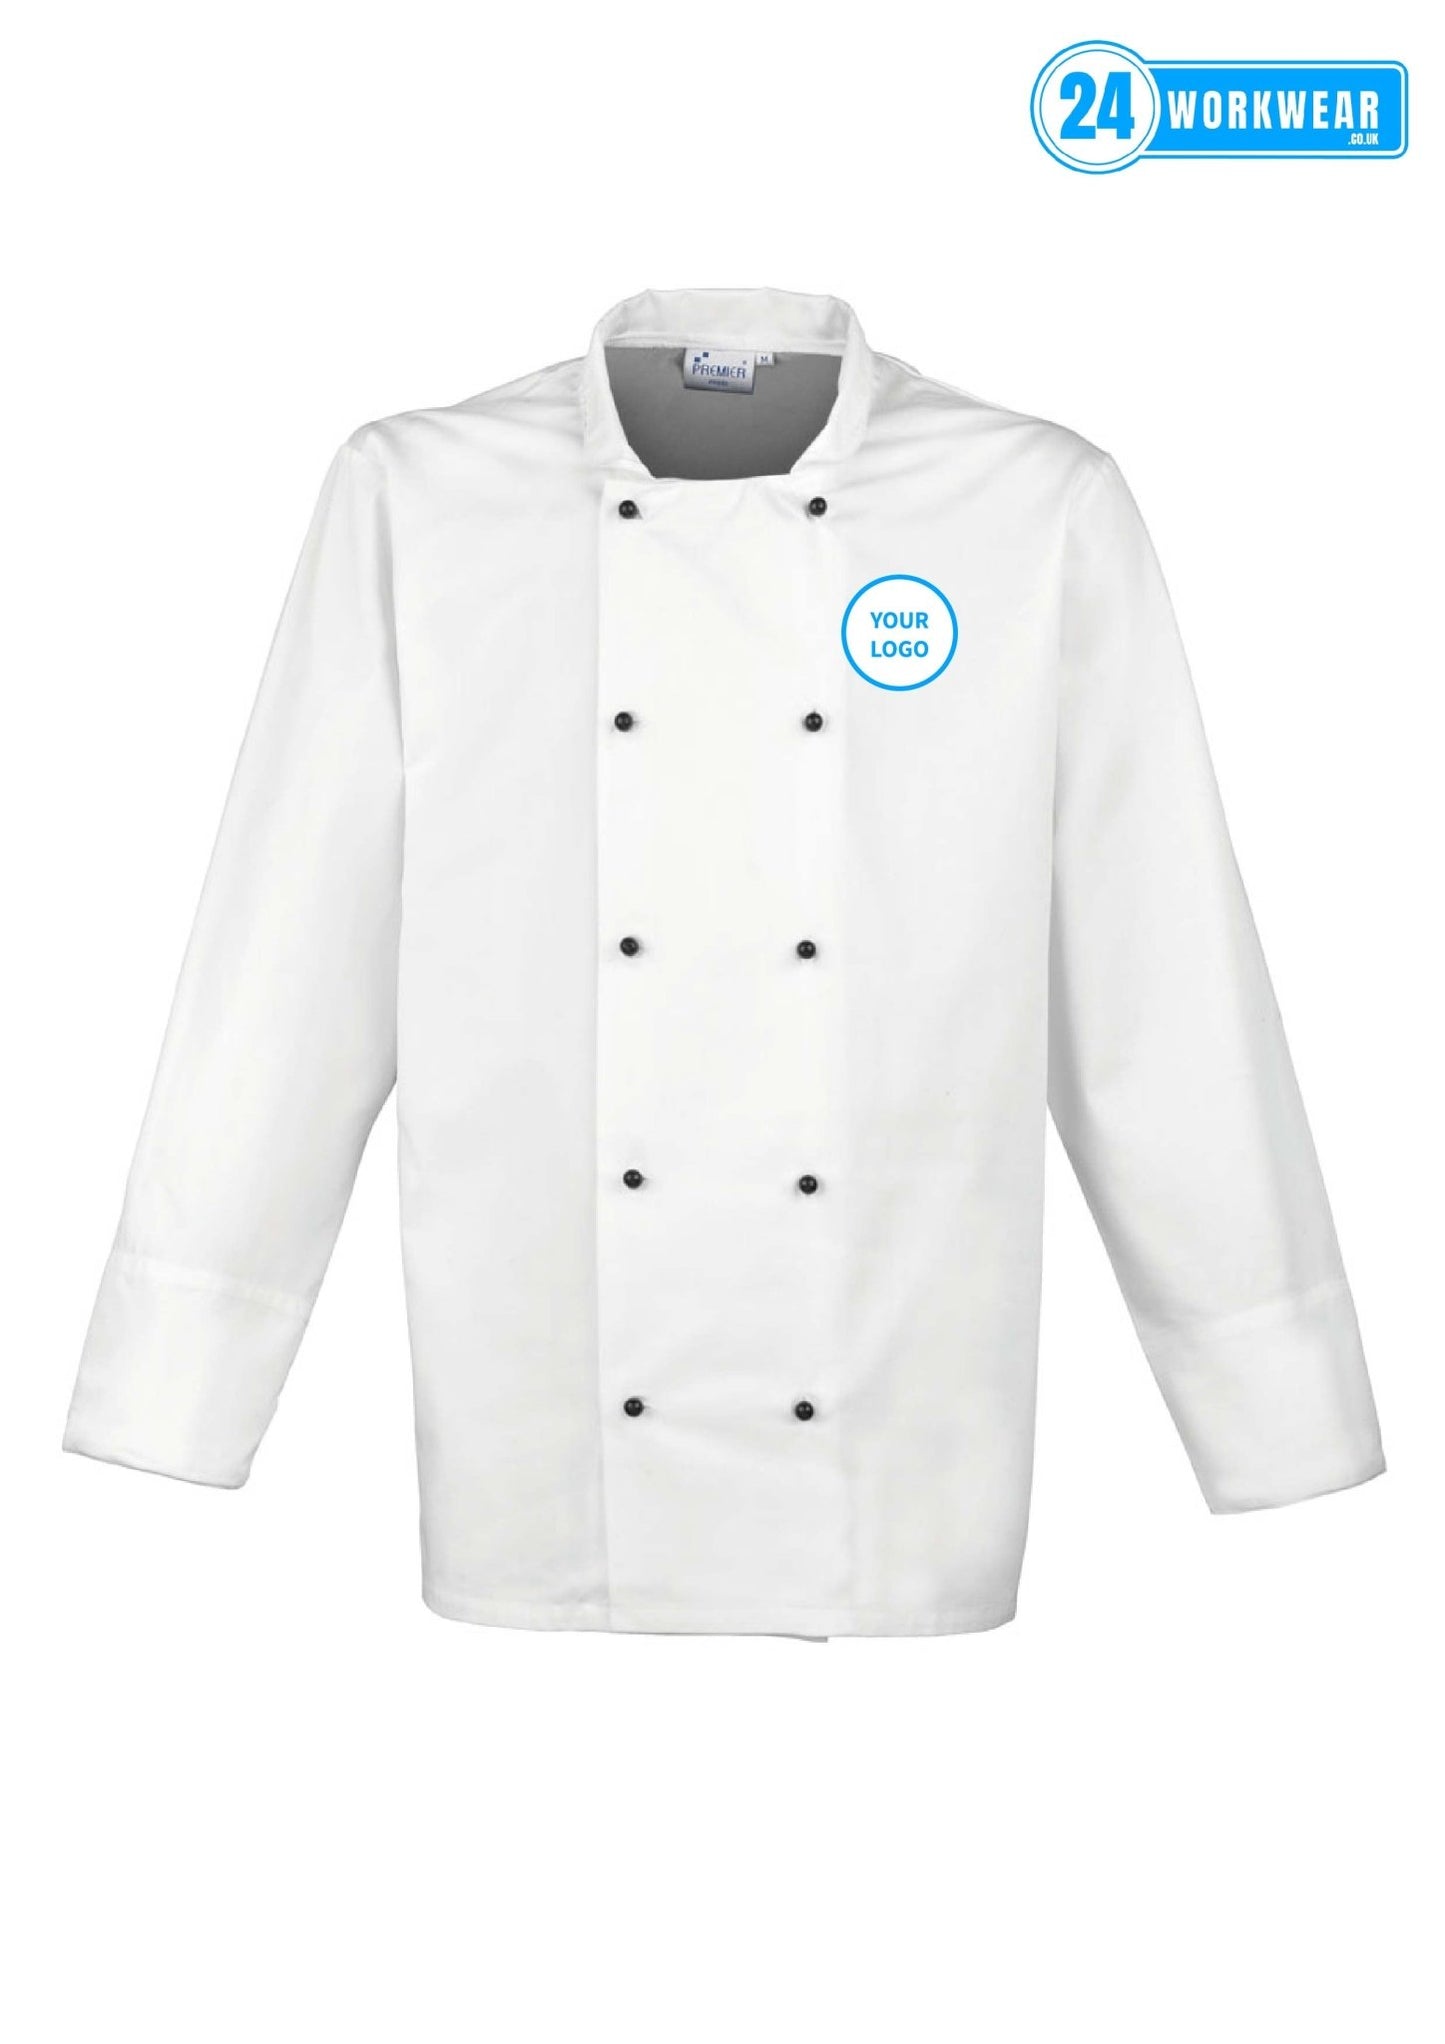 Premier Unisex Cuisine Chef's Jacket - 24 Workwear - Tunic